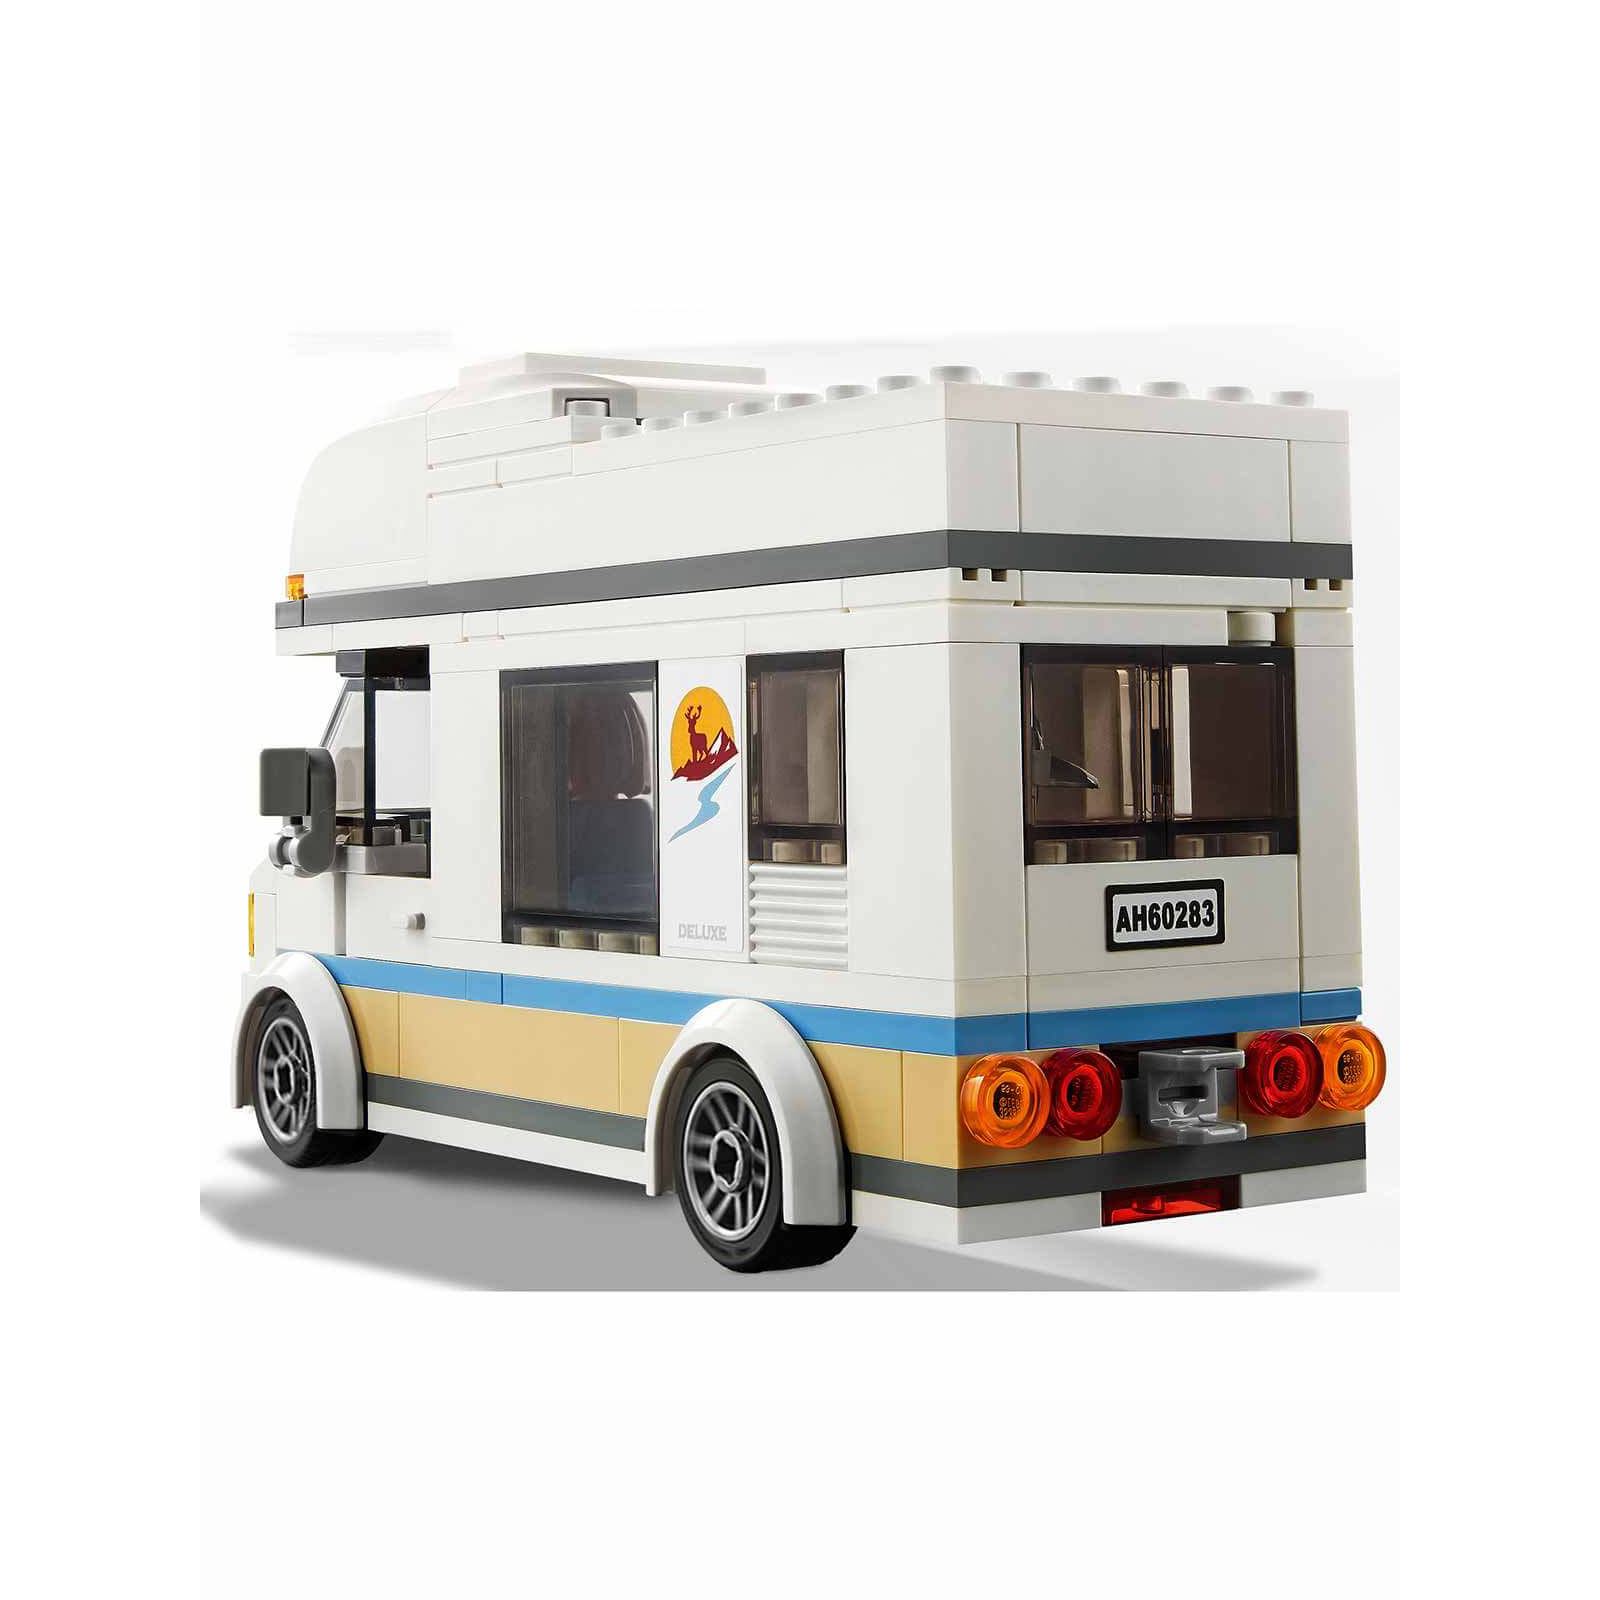 LEGO City Great Vehicles Tatilci Karavanı